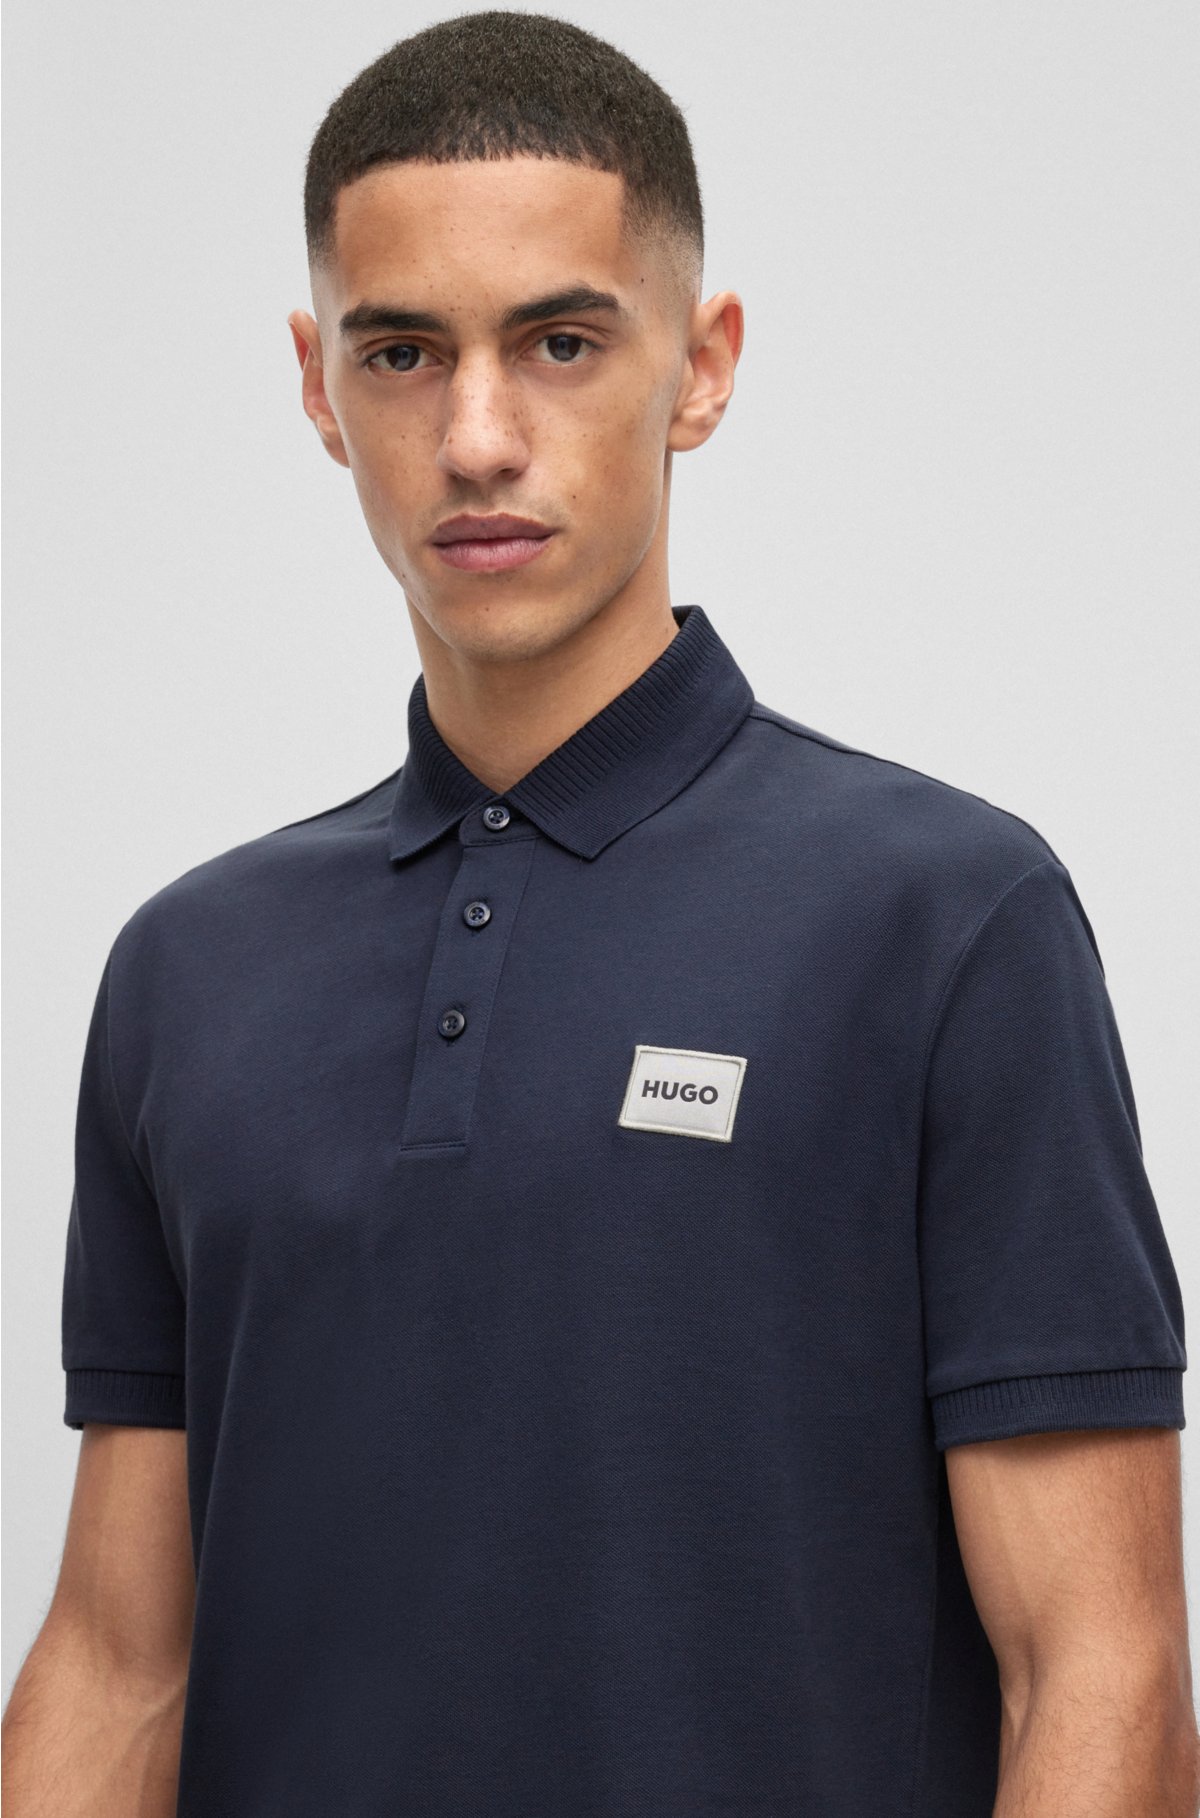 Louis Vuitton 2019 Half Monogram Polo Shirt - Blue Polos, Clothing